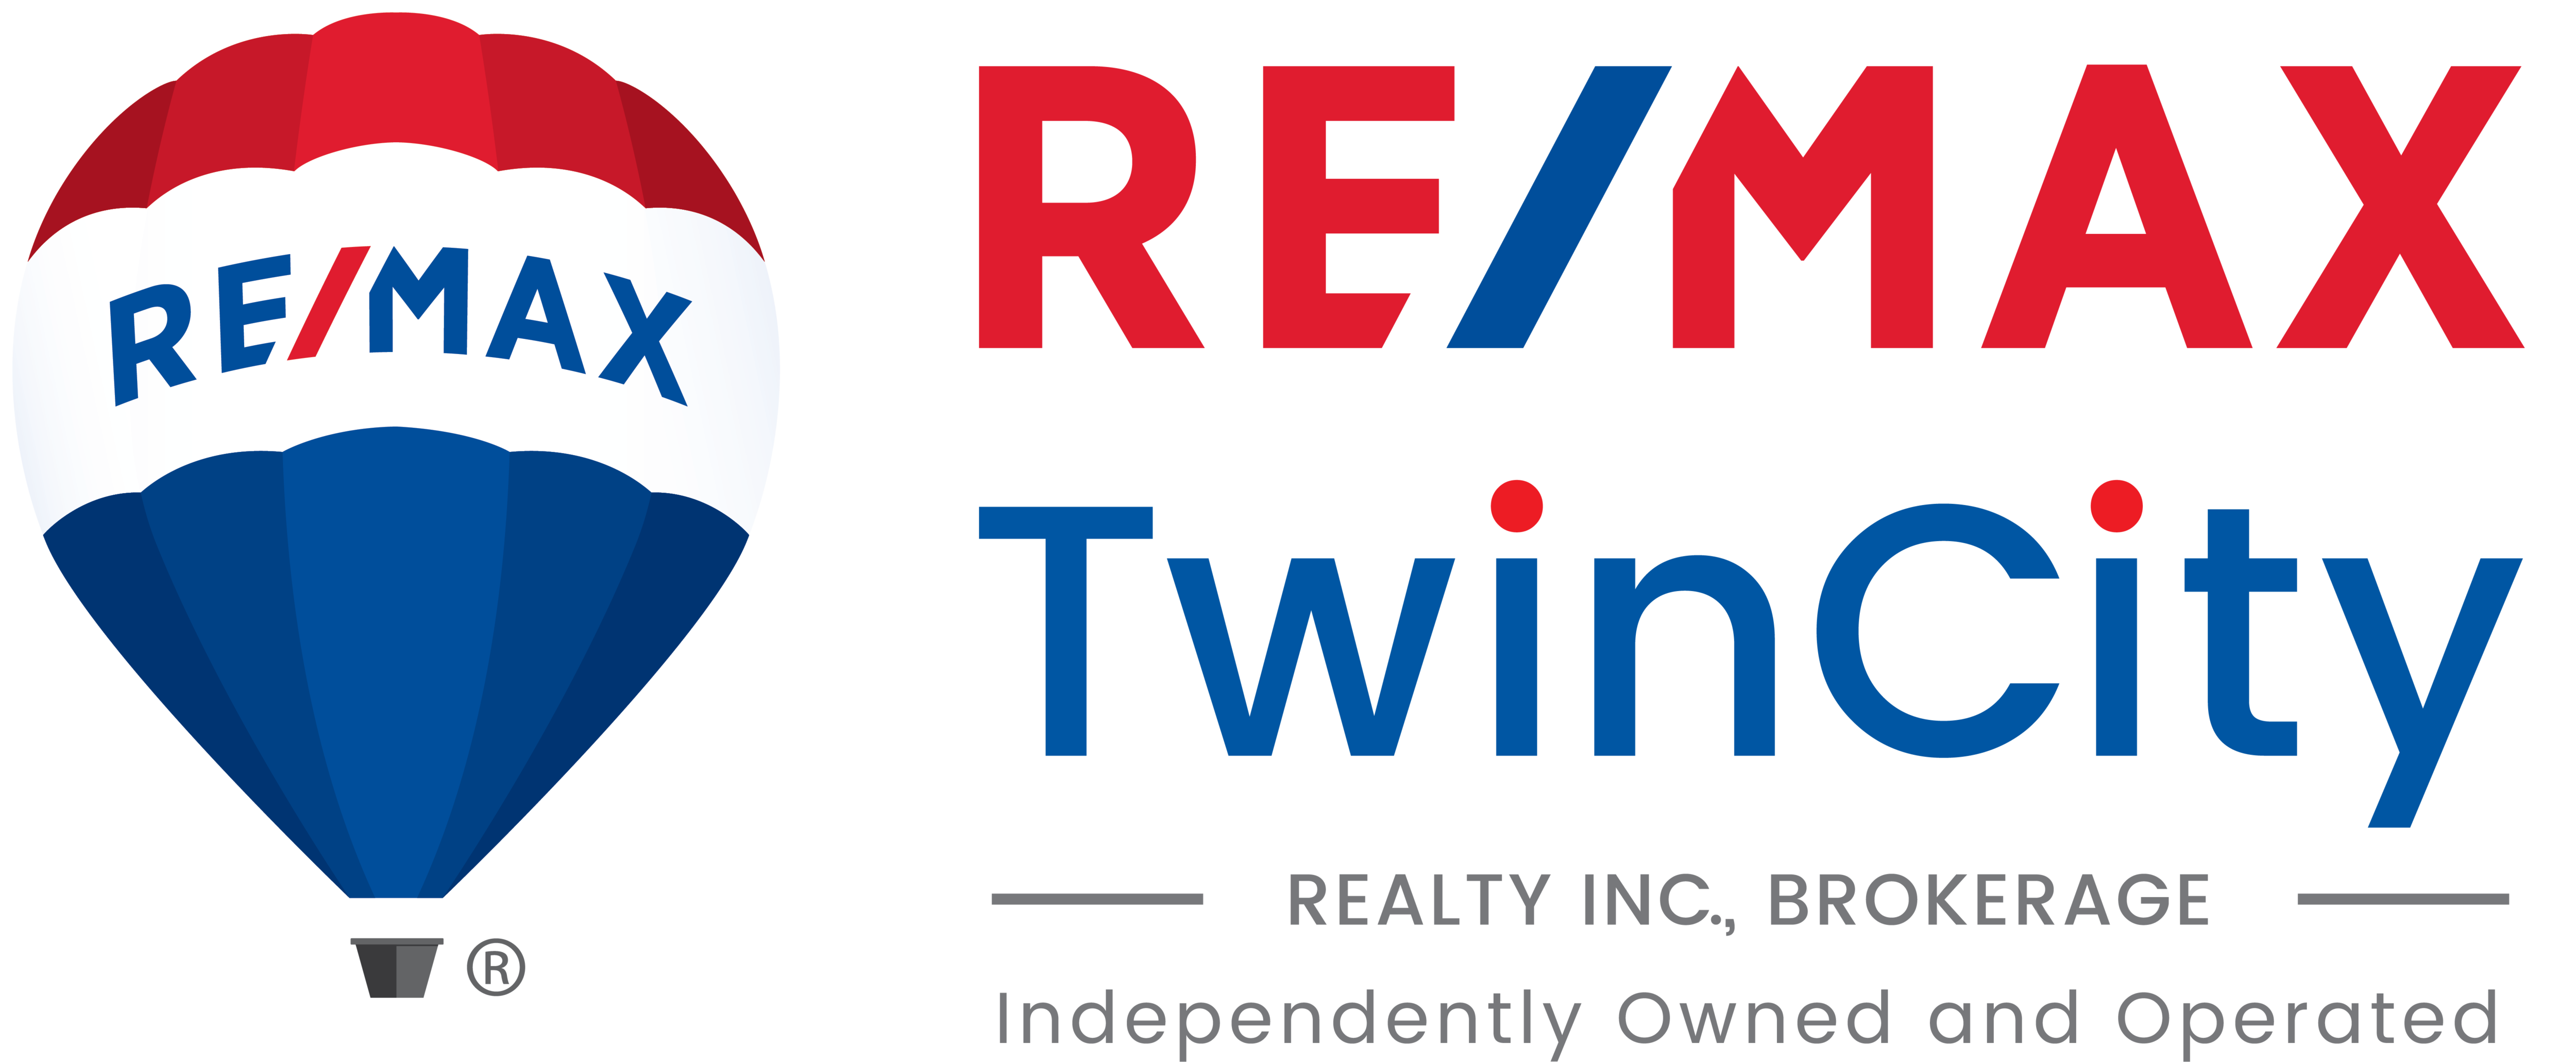 Remax Twin City